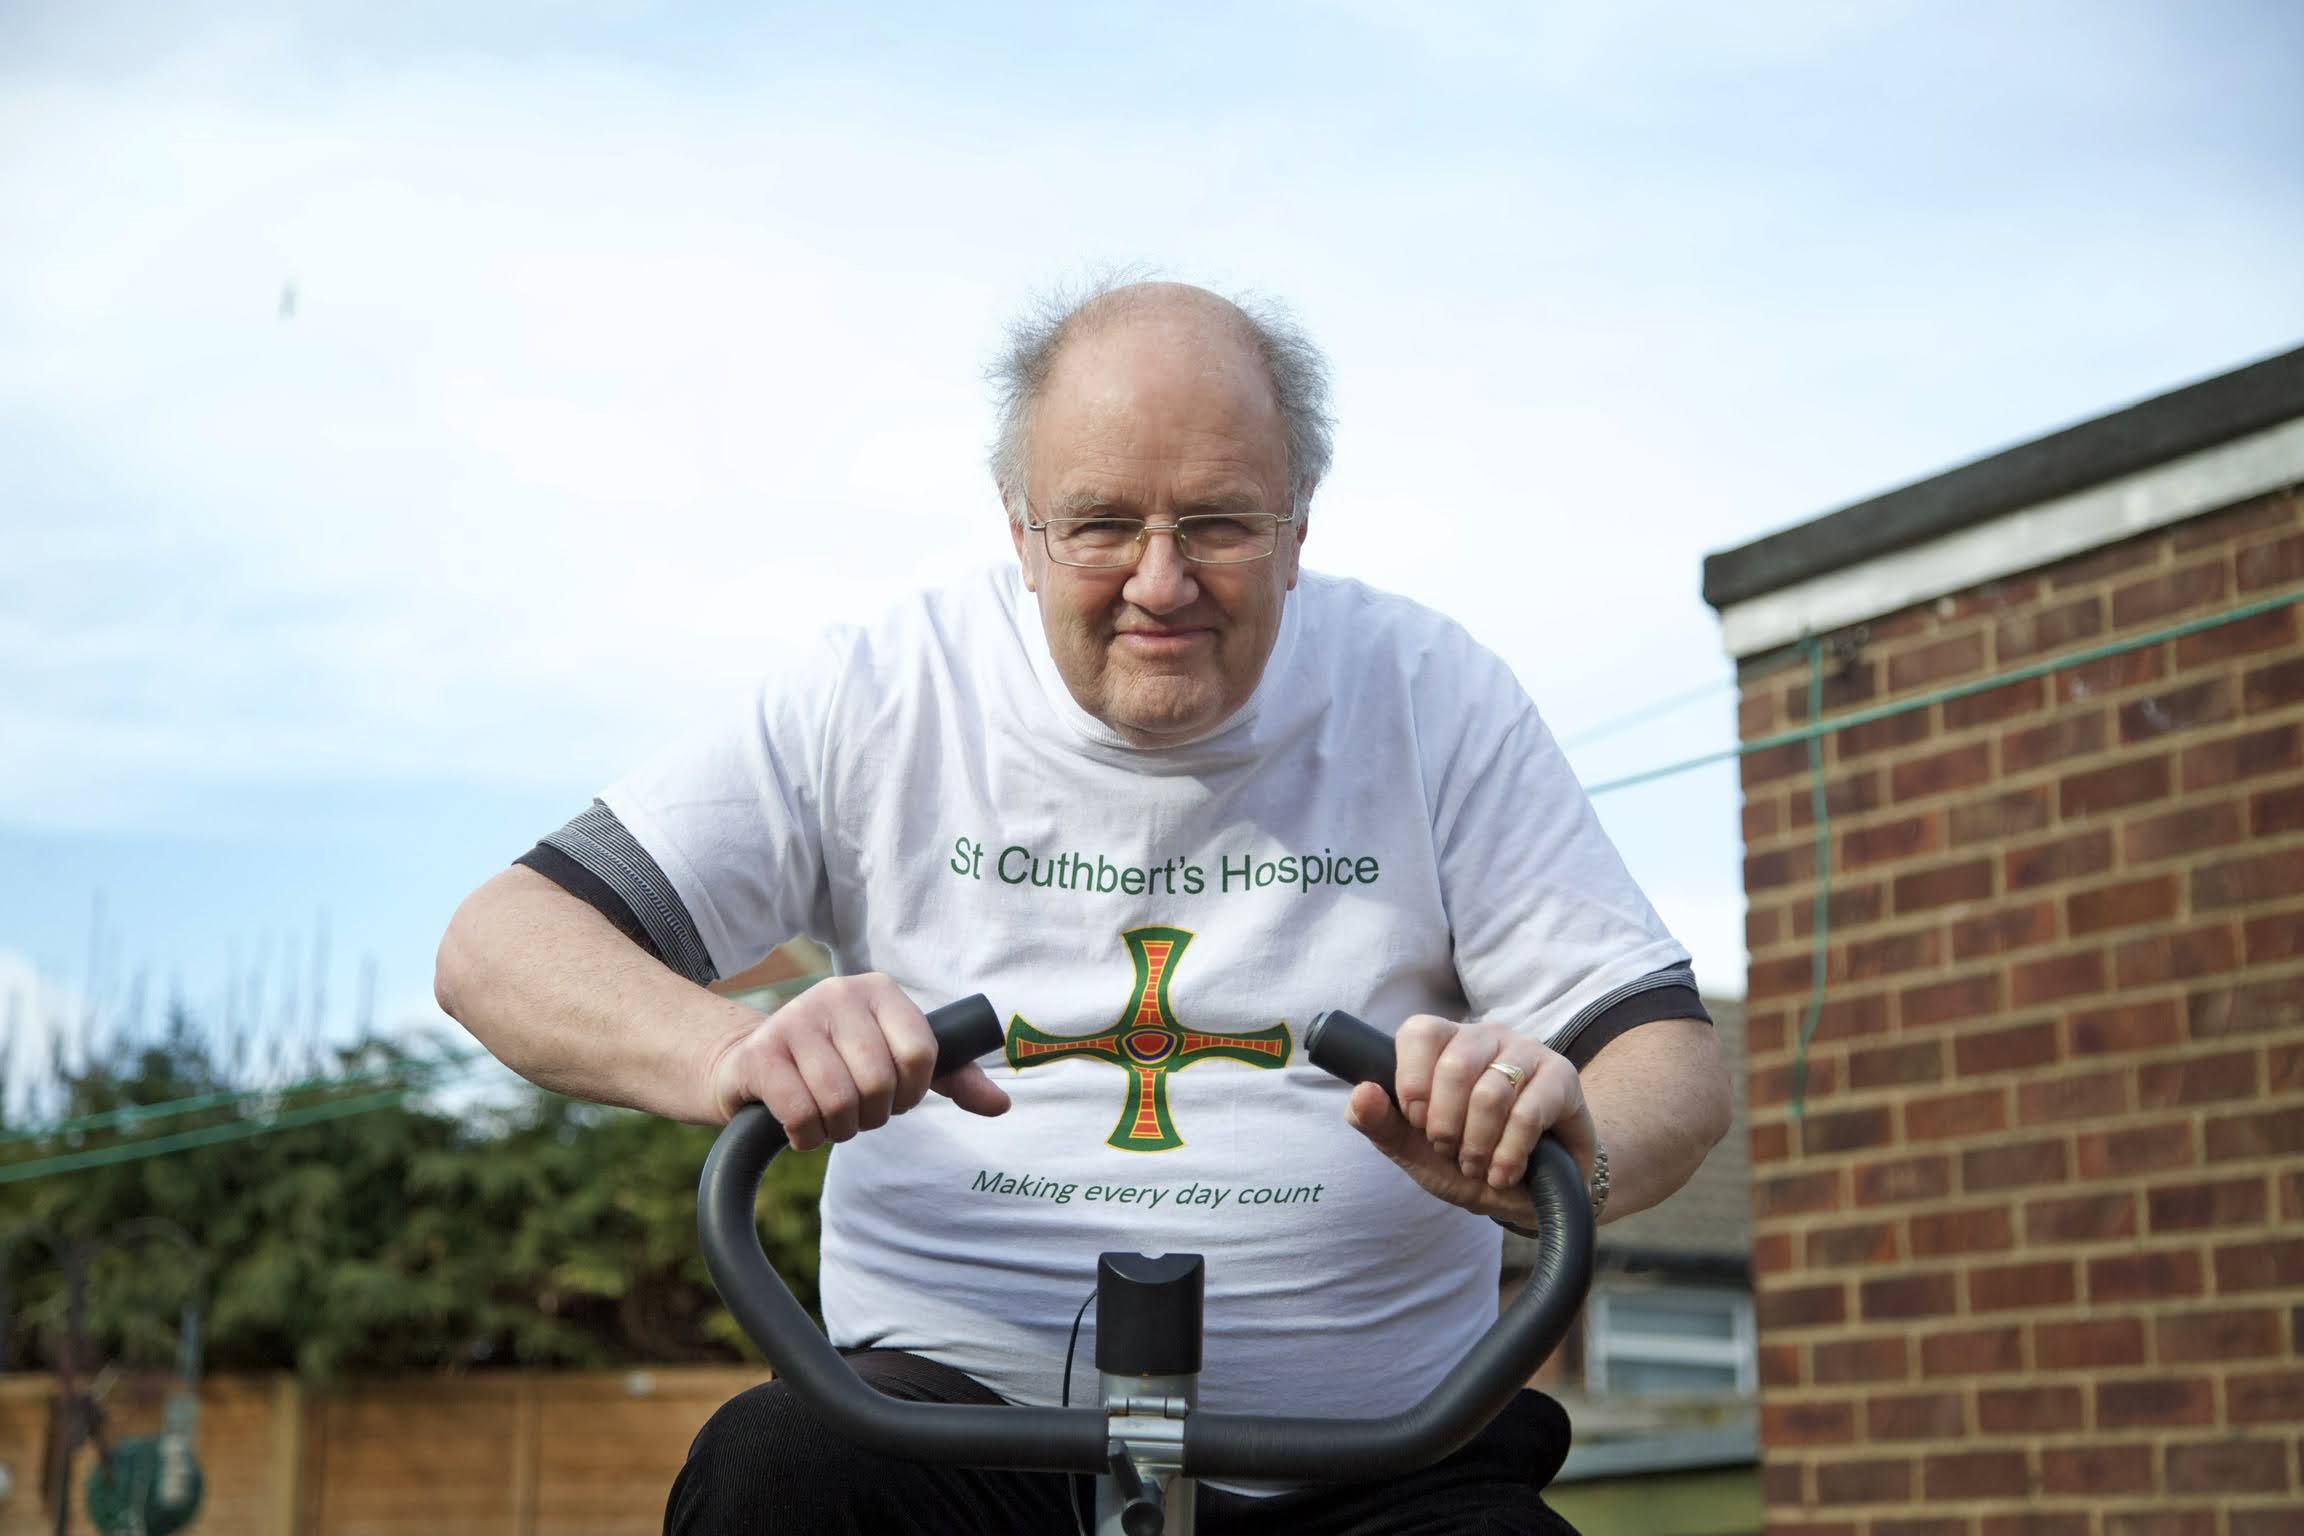 5p man Ian Watt is raising money for St Cuthberts Hospice by riding a gym bike Picture: SARAH CALDECOTT